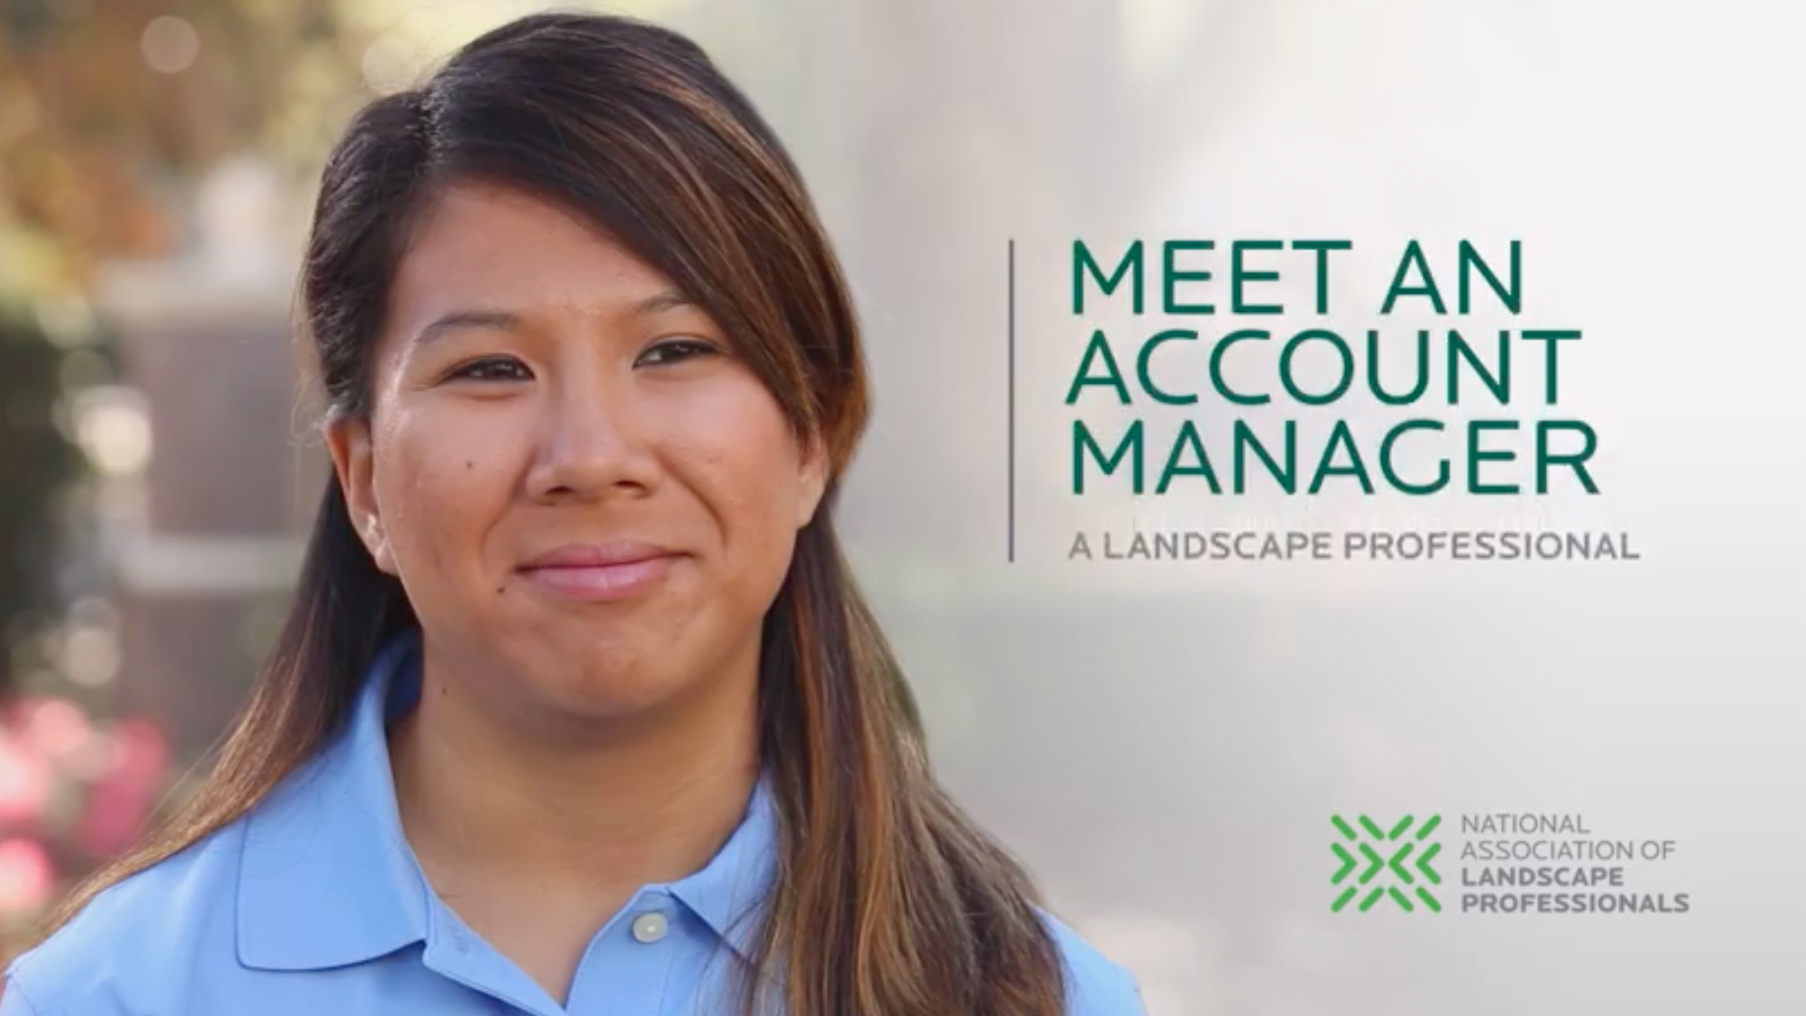 Meet an Account Manager - Landscape Industry Testimonial Videos